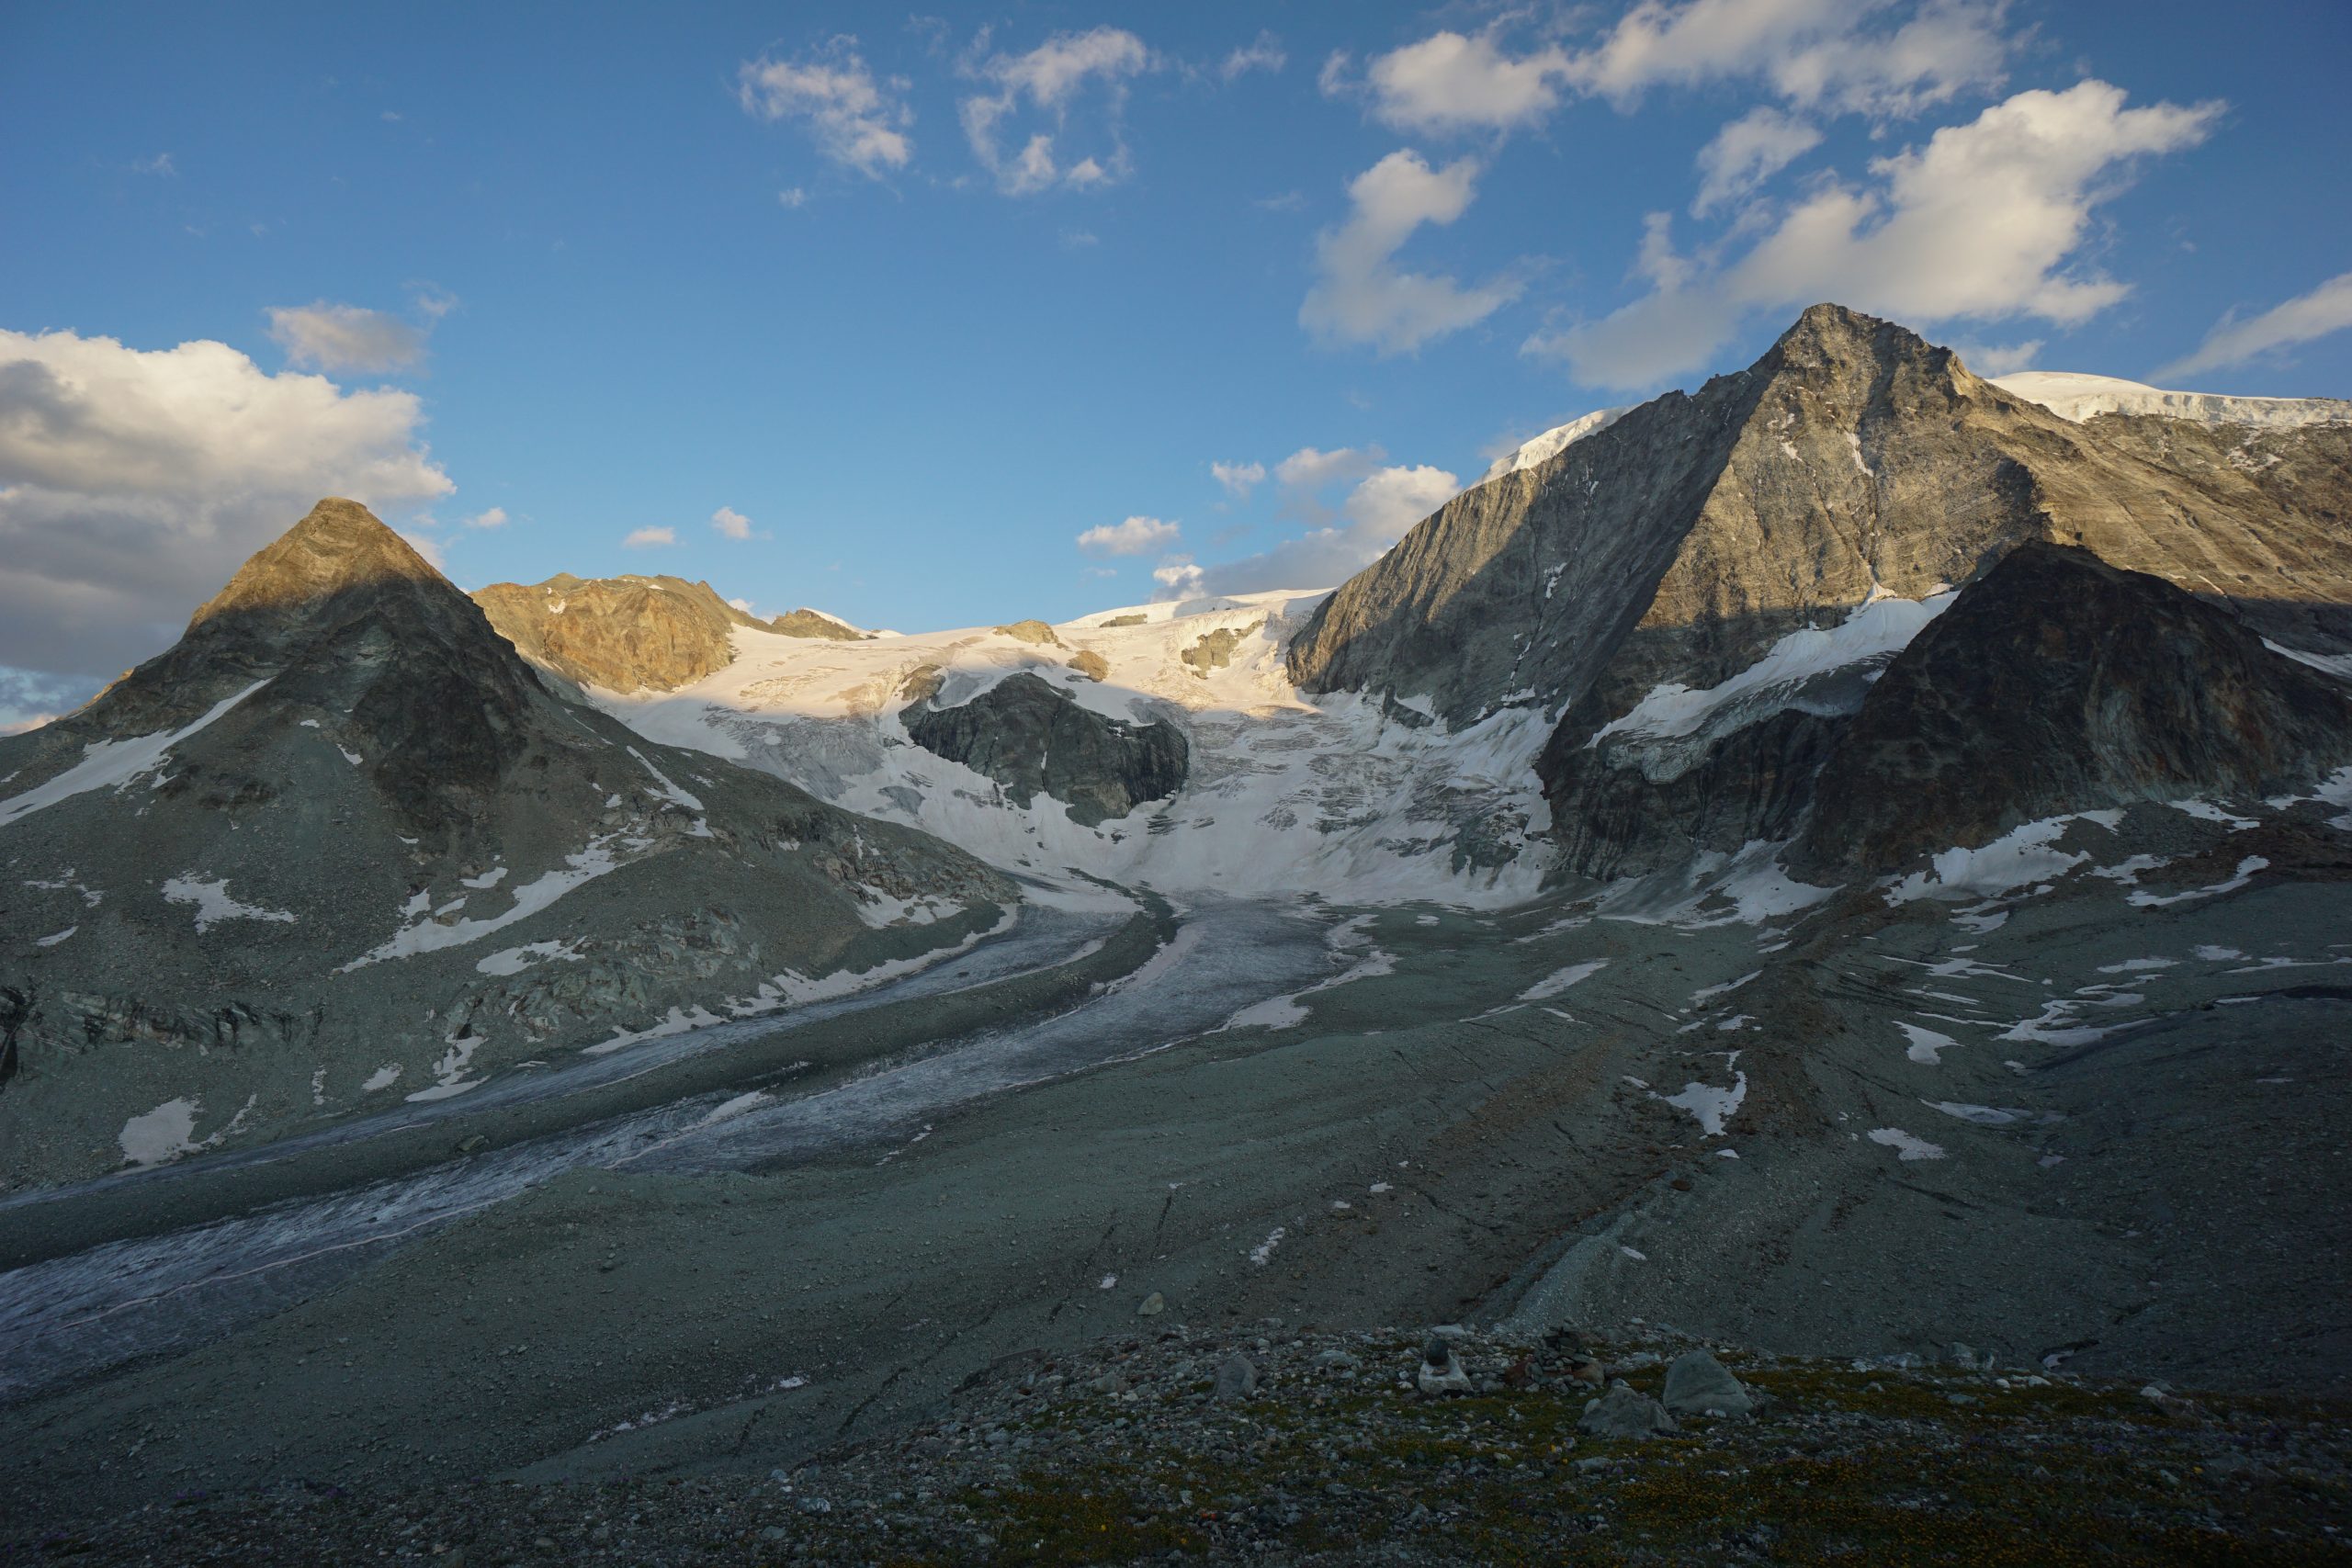 Warm evening light leaving the glacier. Tomorrow we'll cross it.